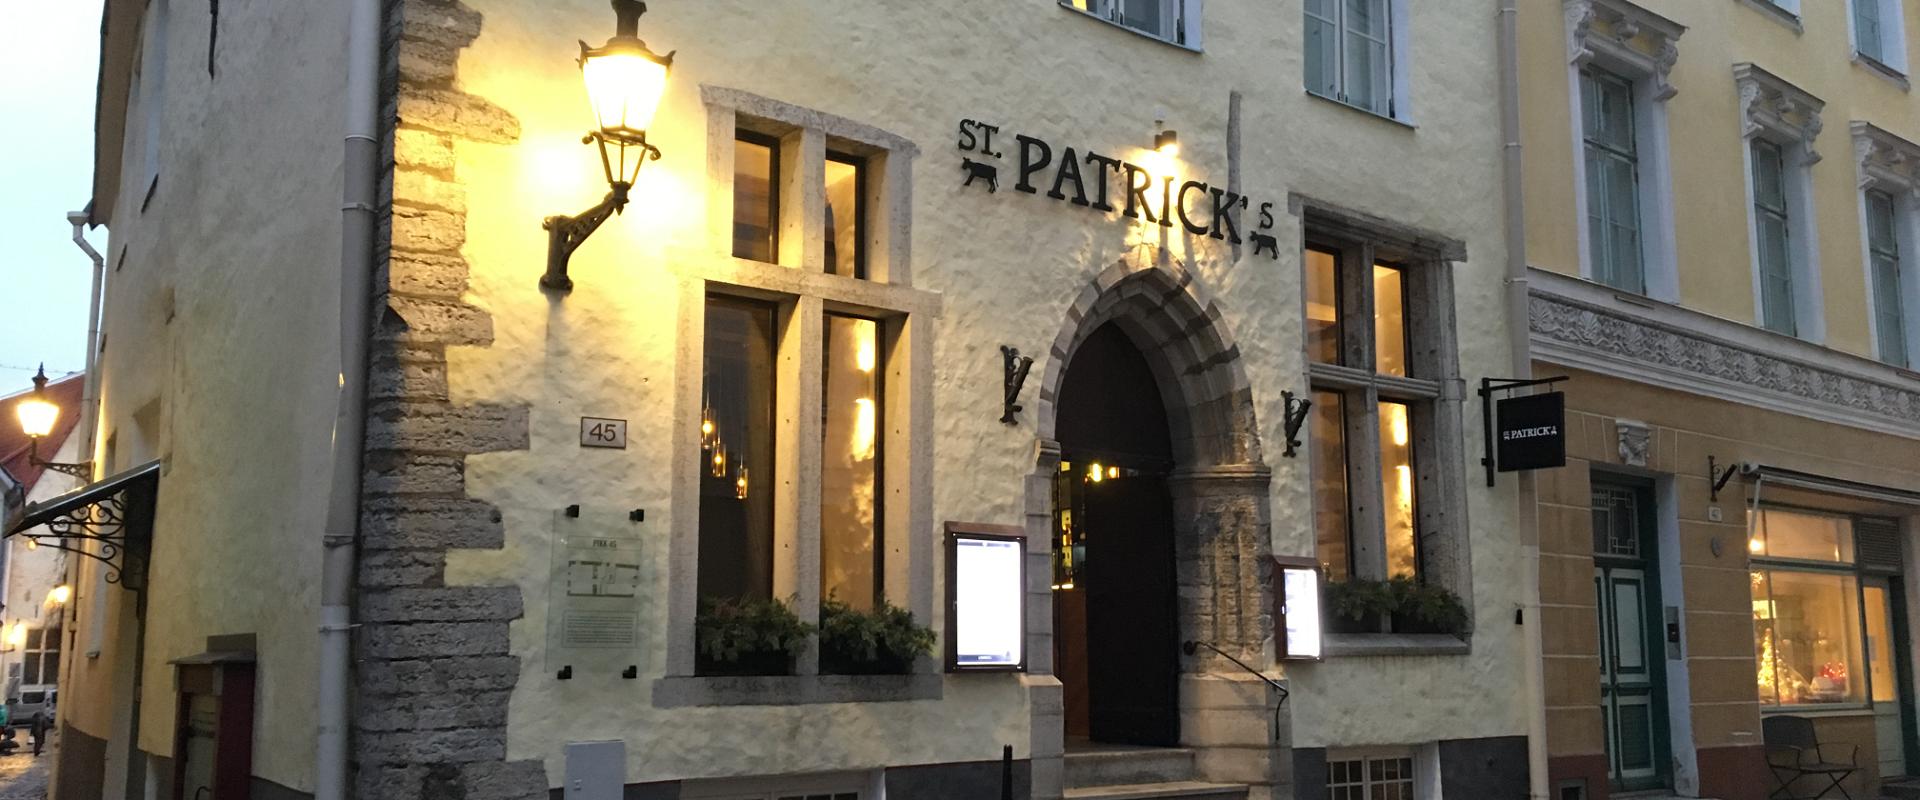 St. Patrick's restoran, Pikk 45